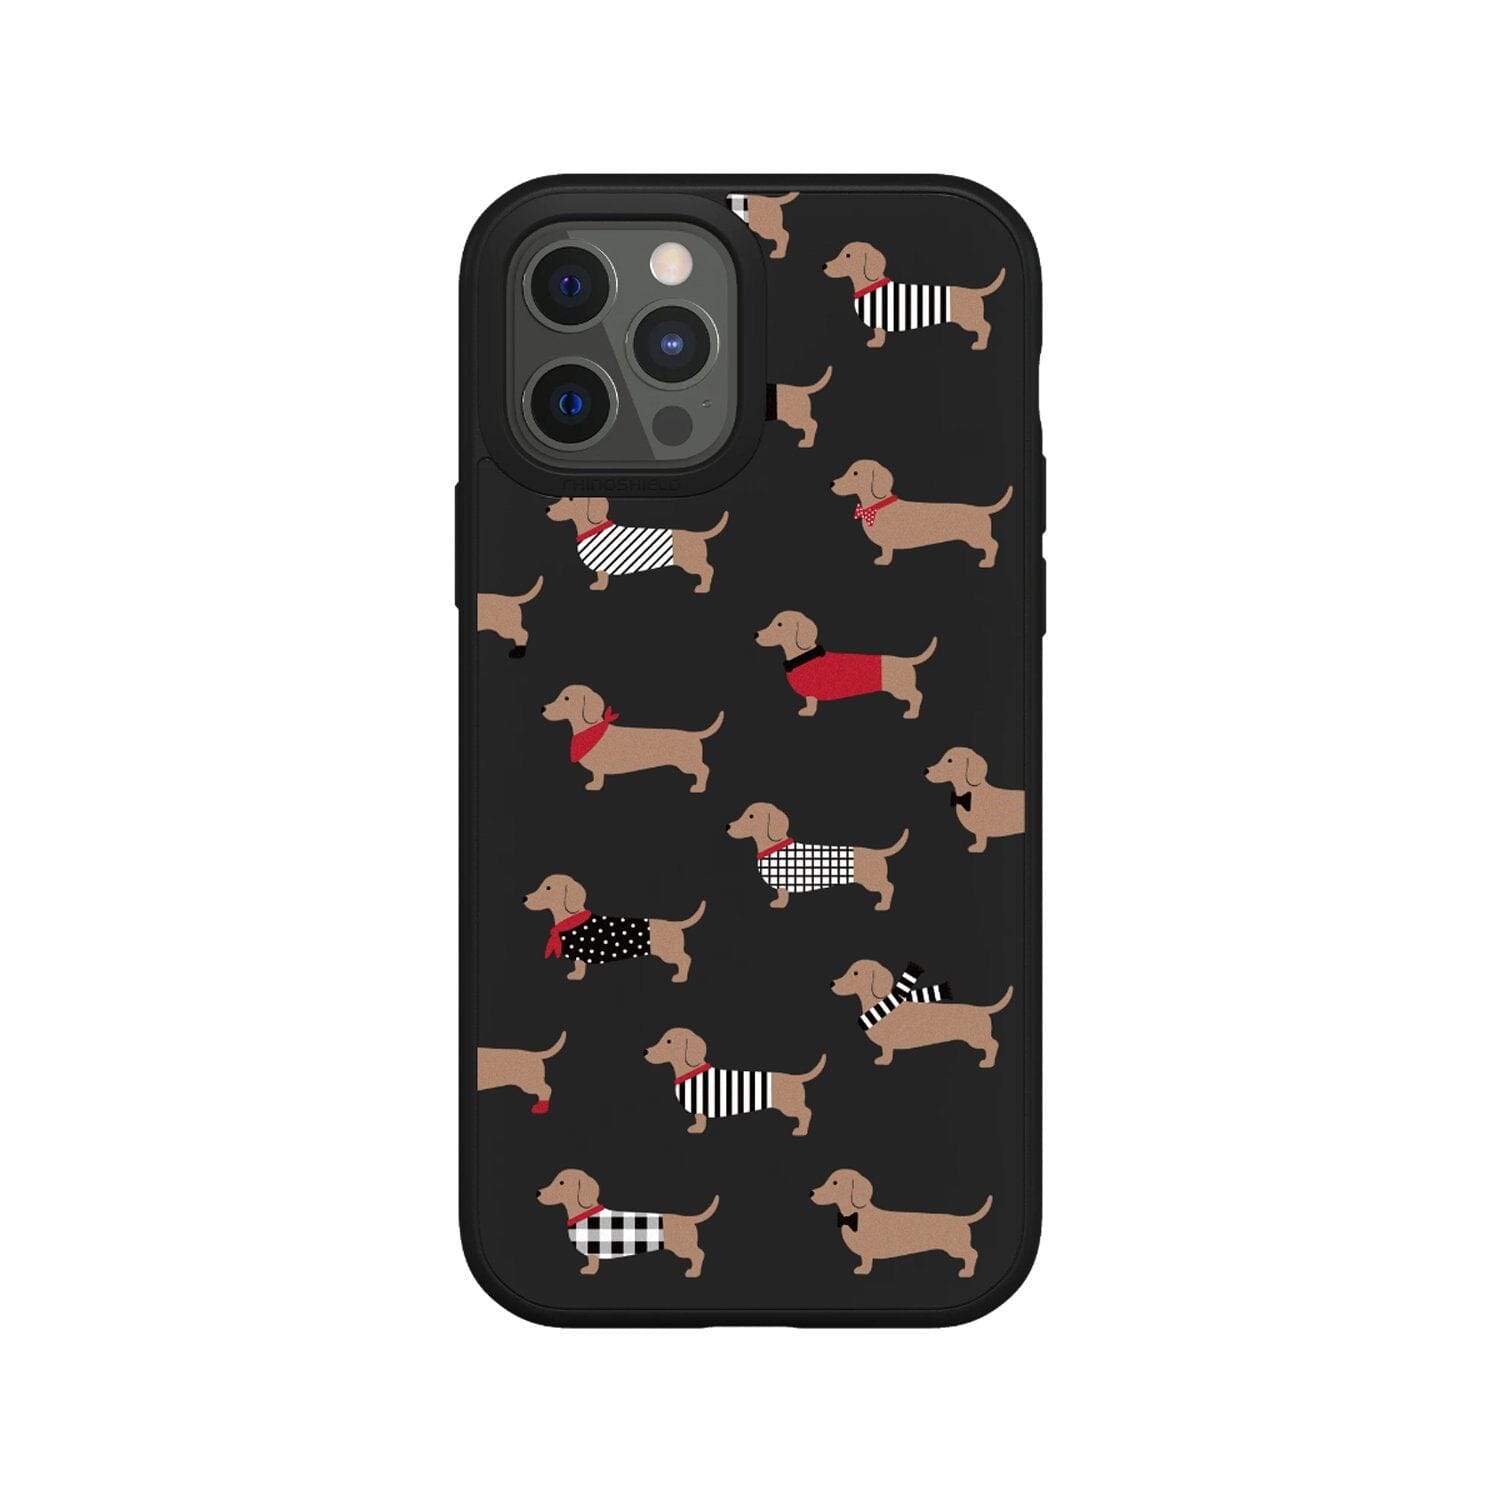 RhinoShield SolidSuit Design Case for iPhone 12 Series (2020) Default RhinoShield iPhone 12 Pro Max 6.7" Black/Weenie Warhol 